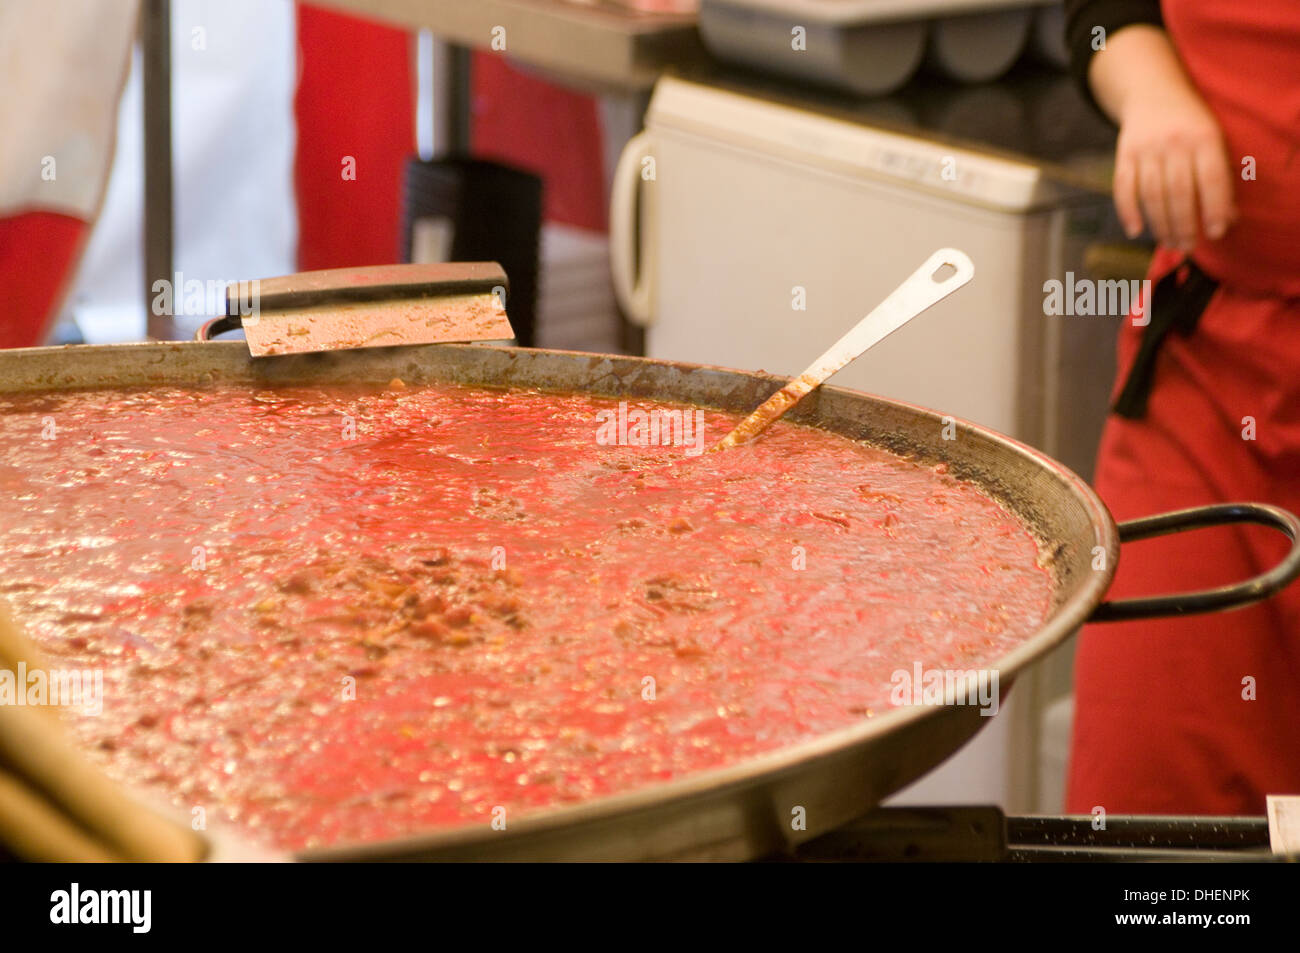 https://c8.alamy.com/comp/DHENPK/big-pan-saucepan-of-chili-cook-off-cooking-pans-mince-sauce-pan-saucepans-DHENPK.jpg